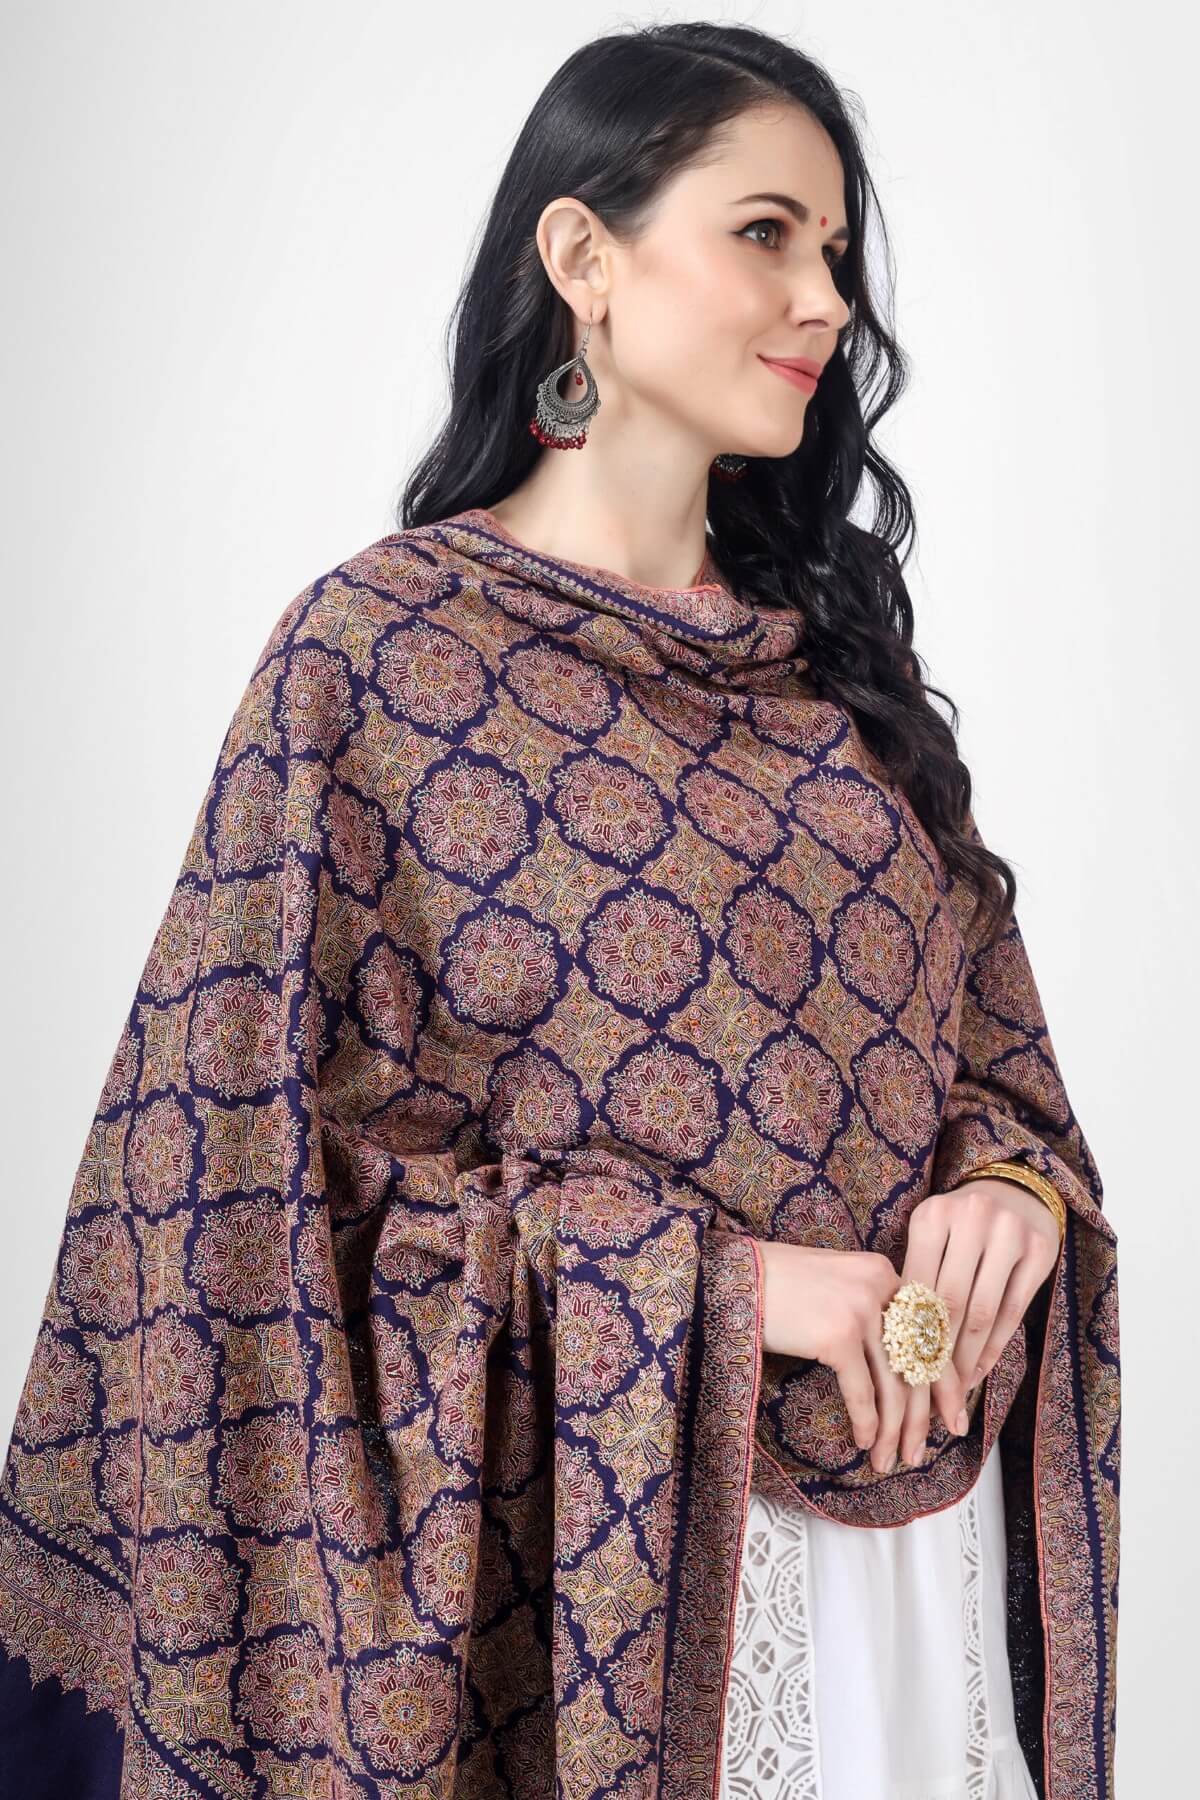 A Royal Blue Pashmina Sozni Jama Reshimkar Shawl is a luxurious handwoven shawl made from high-quality Pashmina fabric 